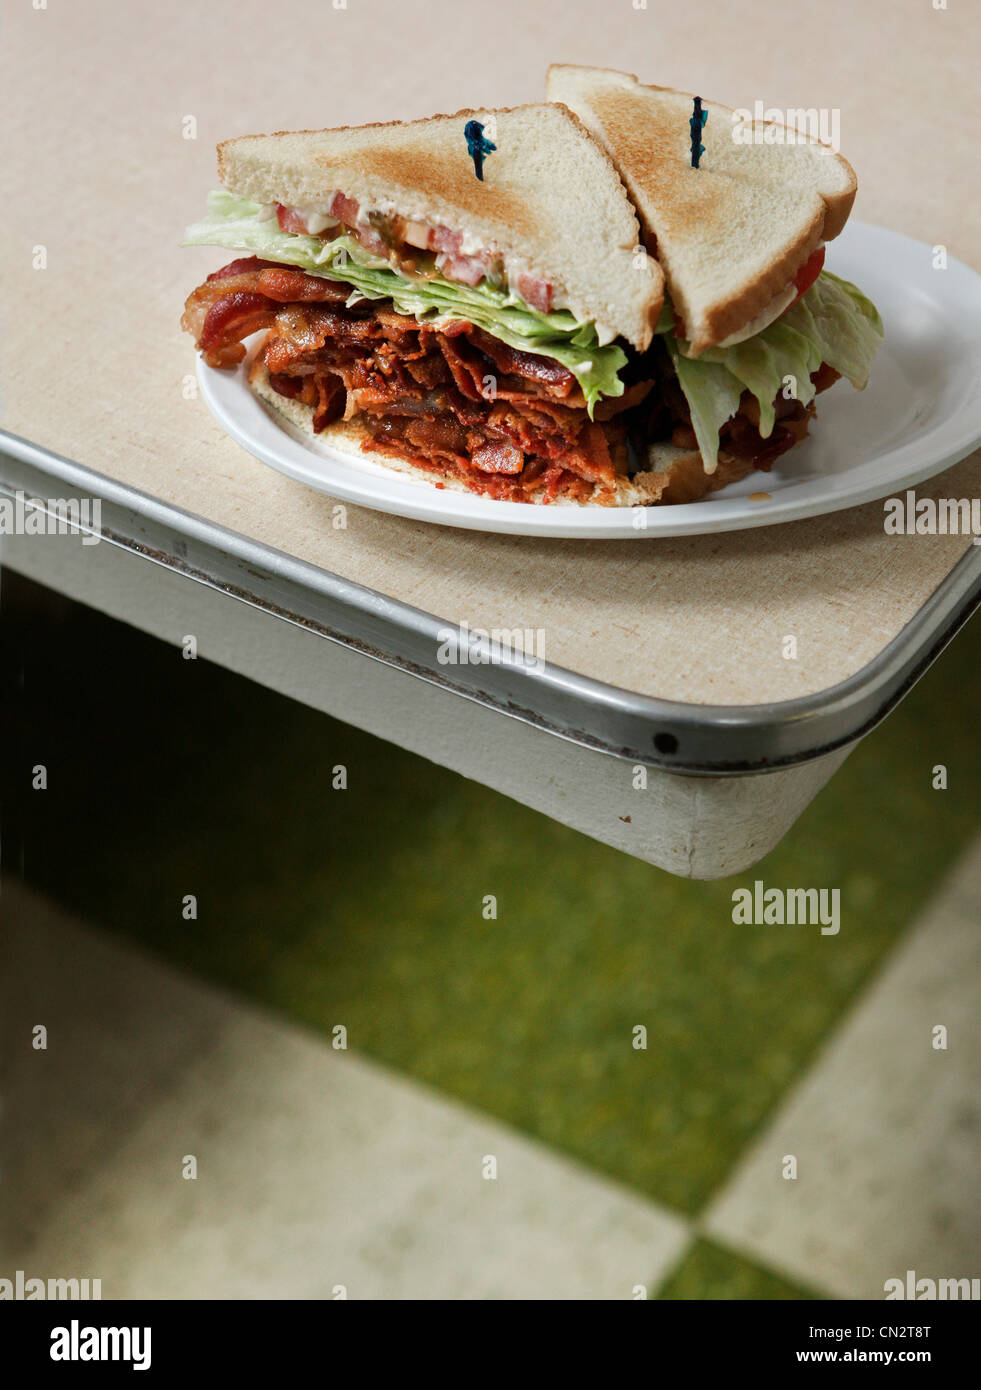 Blt sandwich on plate Stock Photo